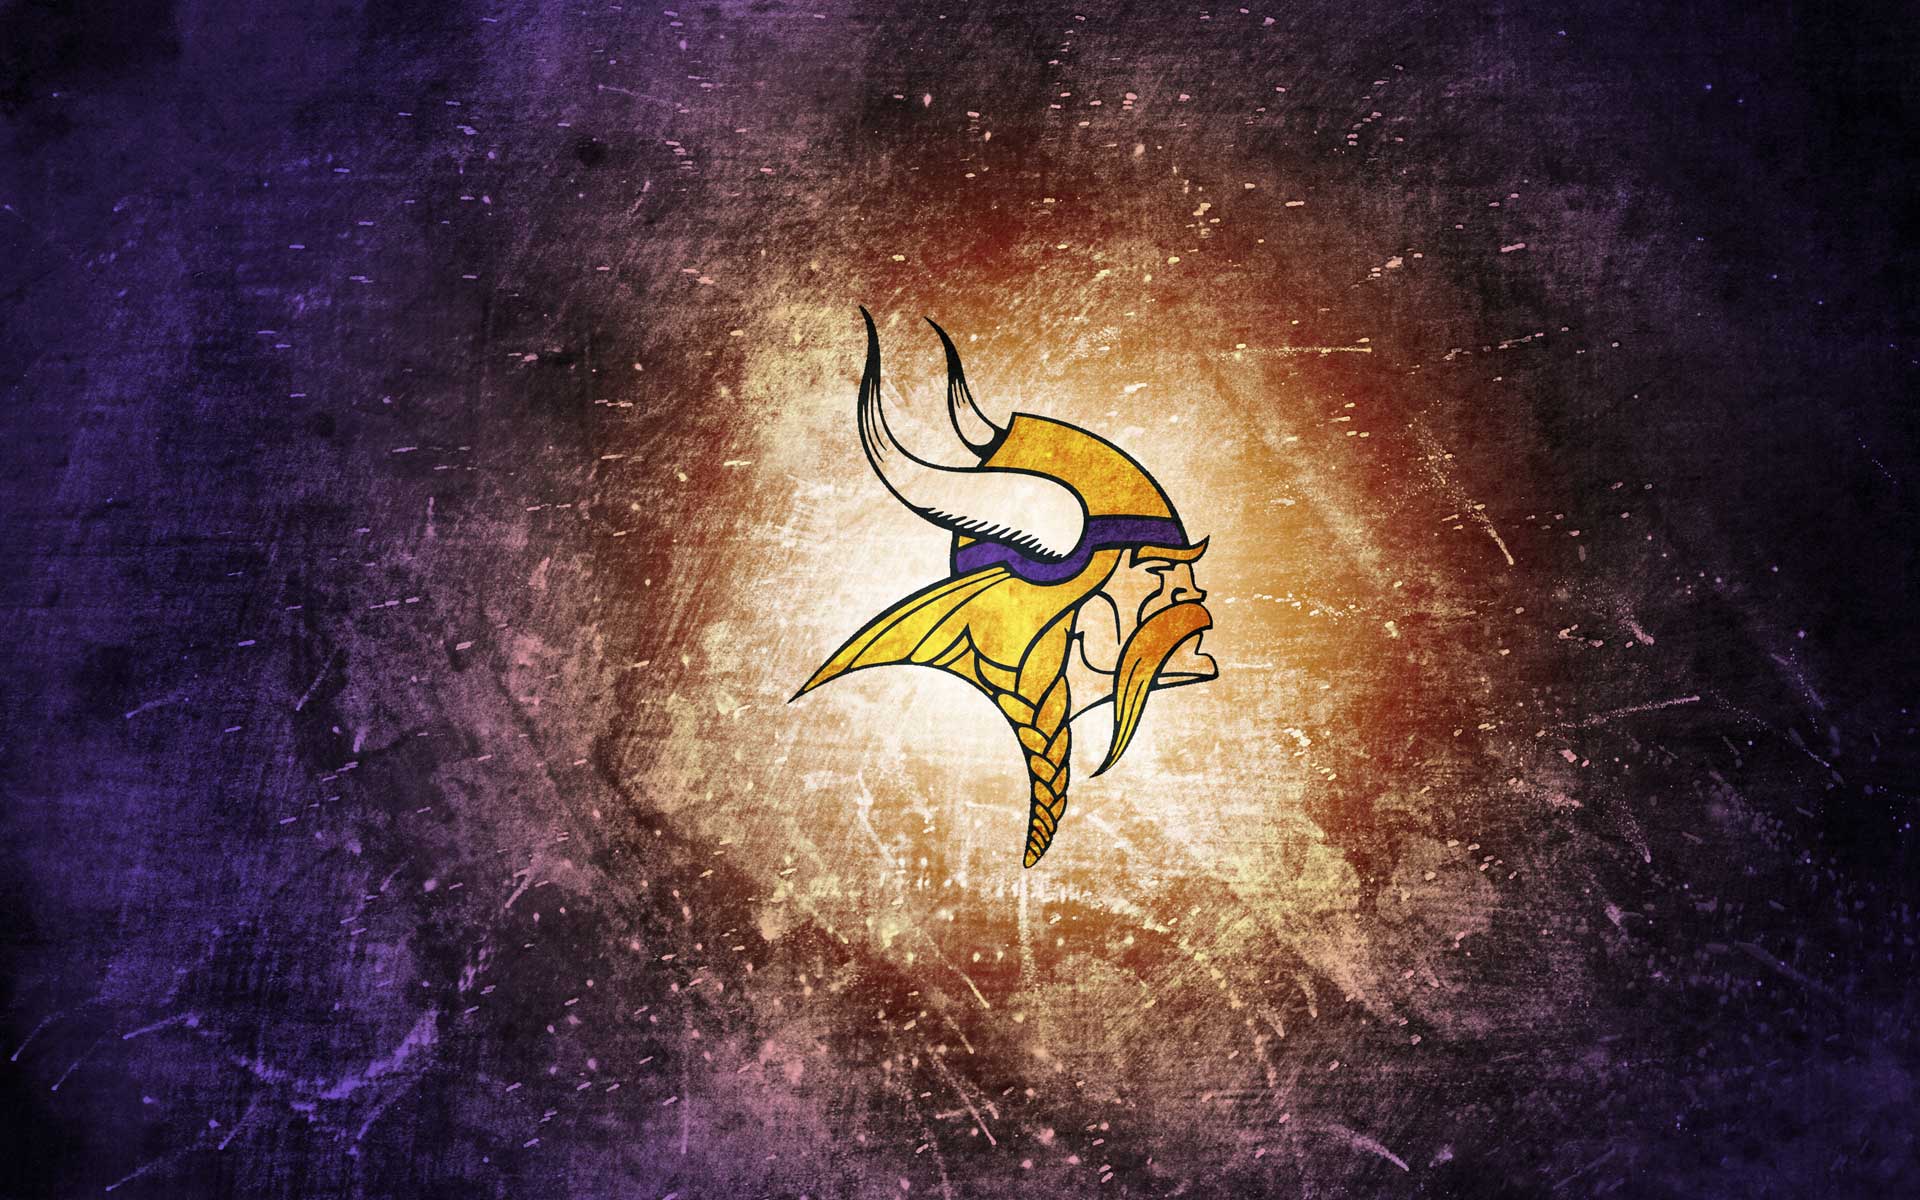 Minnesota Vikings Wallpaper HD Early